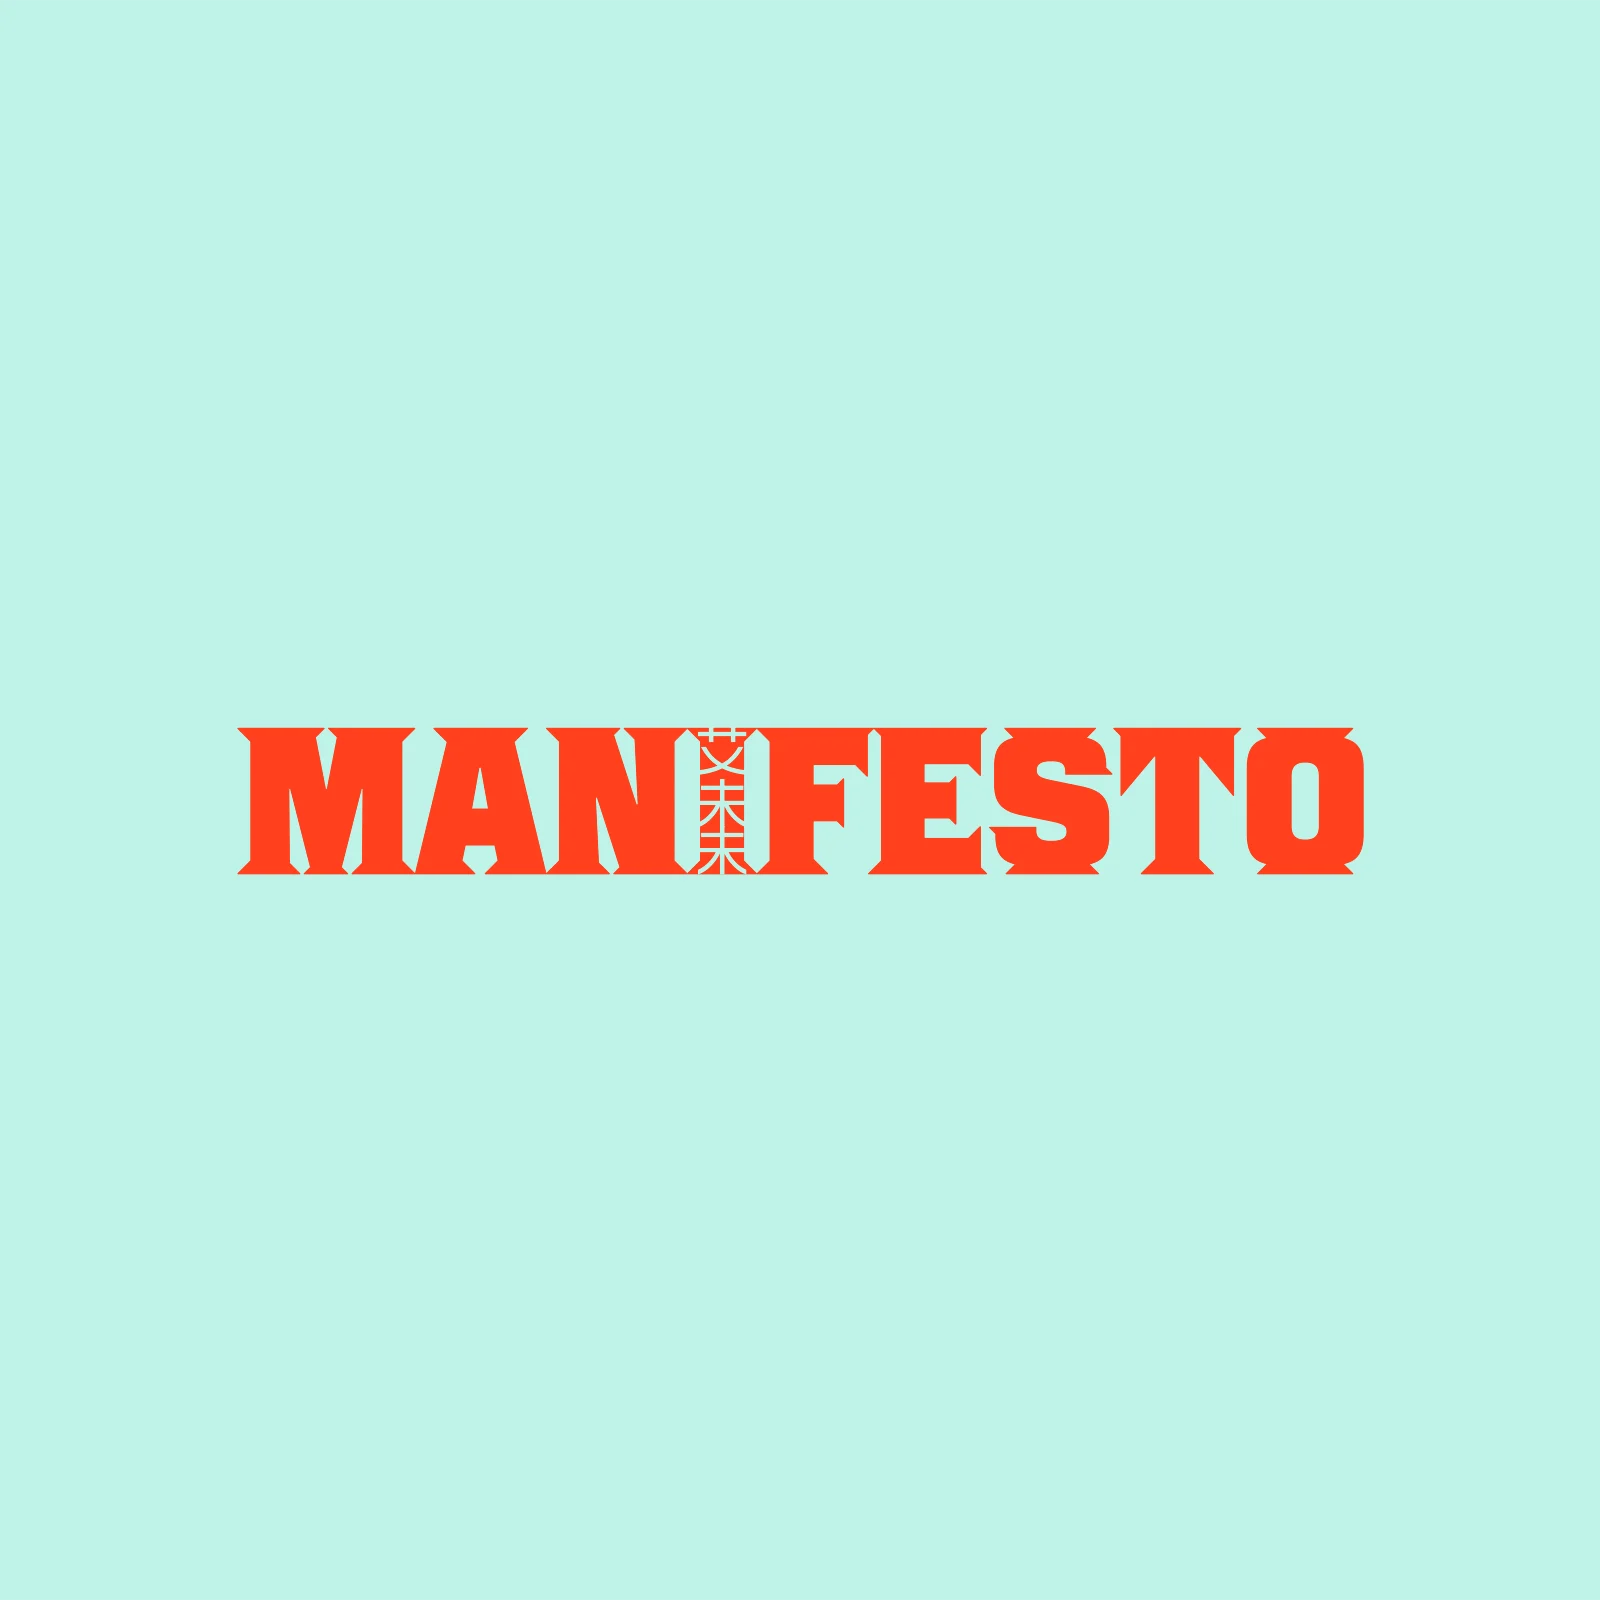 A Manifesto by Ai Weiwei